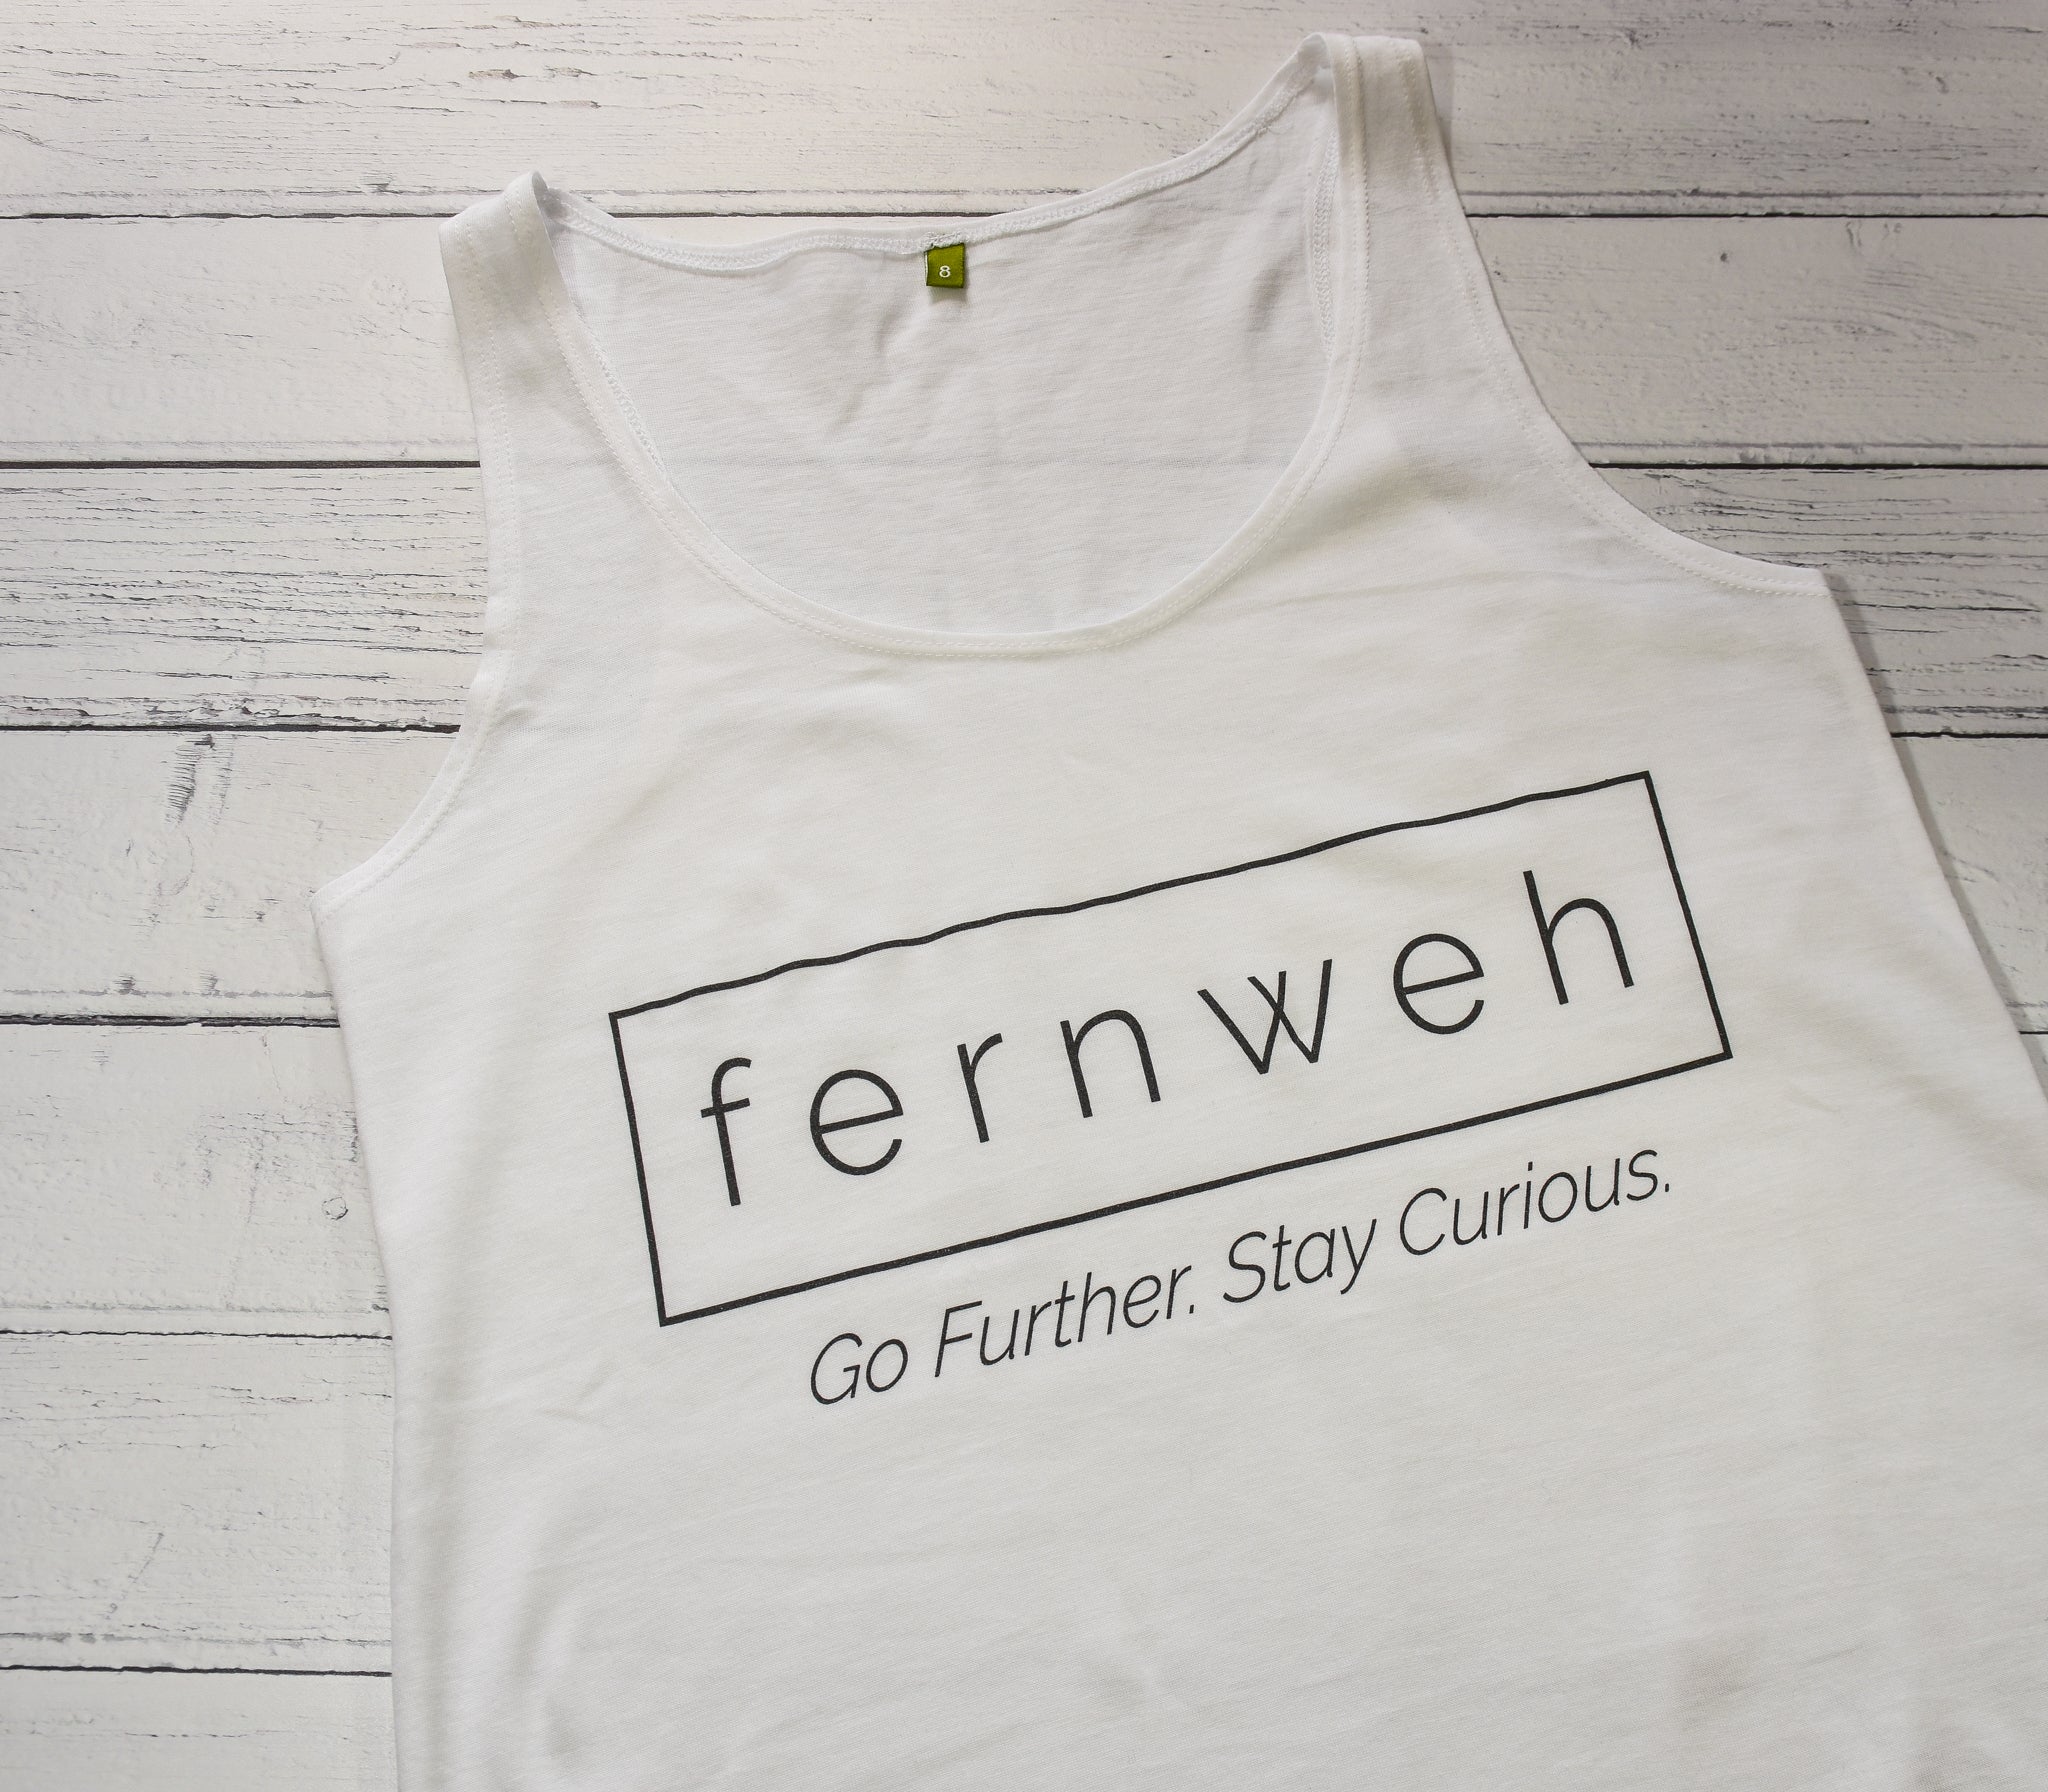 Fernweh UK - Organic Cotton Screenprint Logo Vest